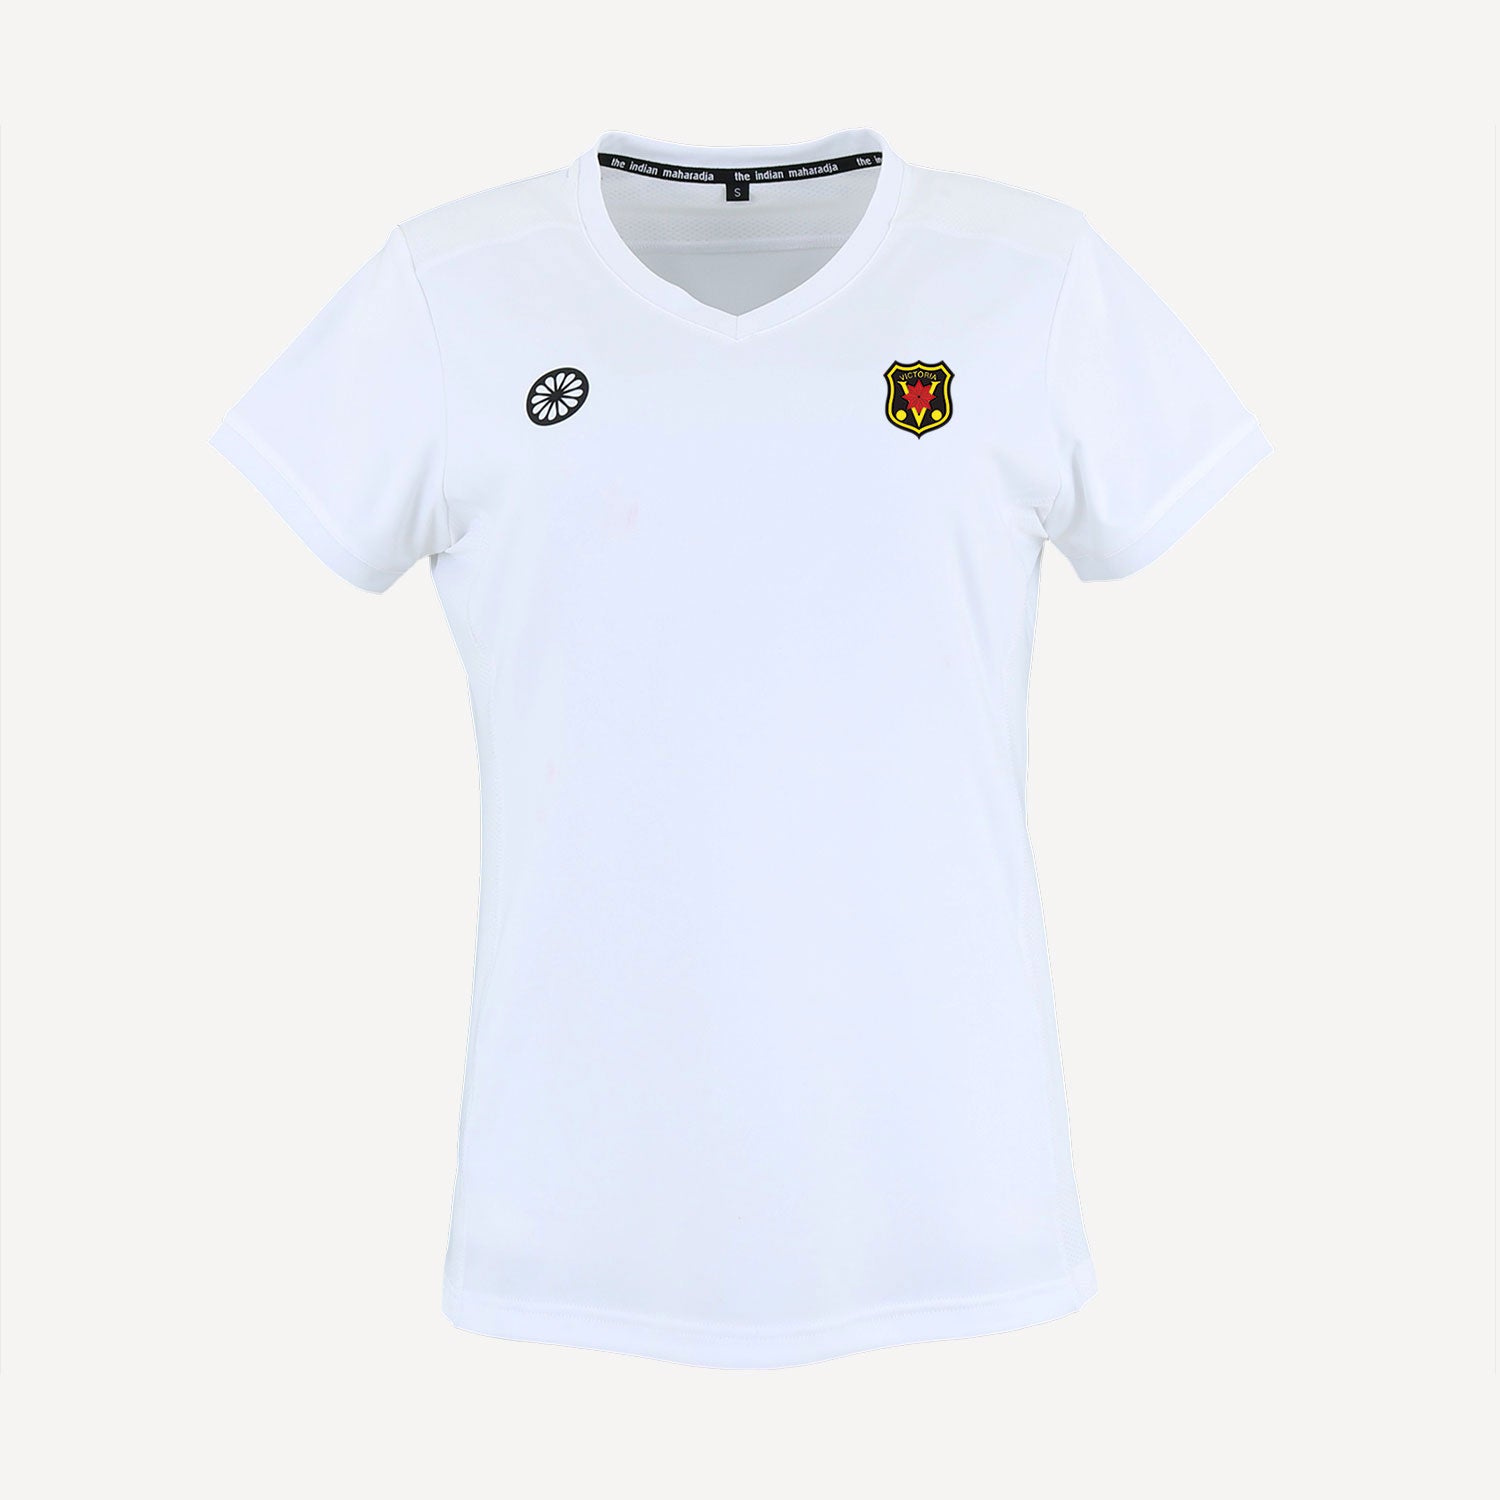 The Indian Maharadja Kadiri Women's Tennis Shirt - TV Victoria White (1)